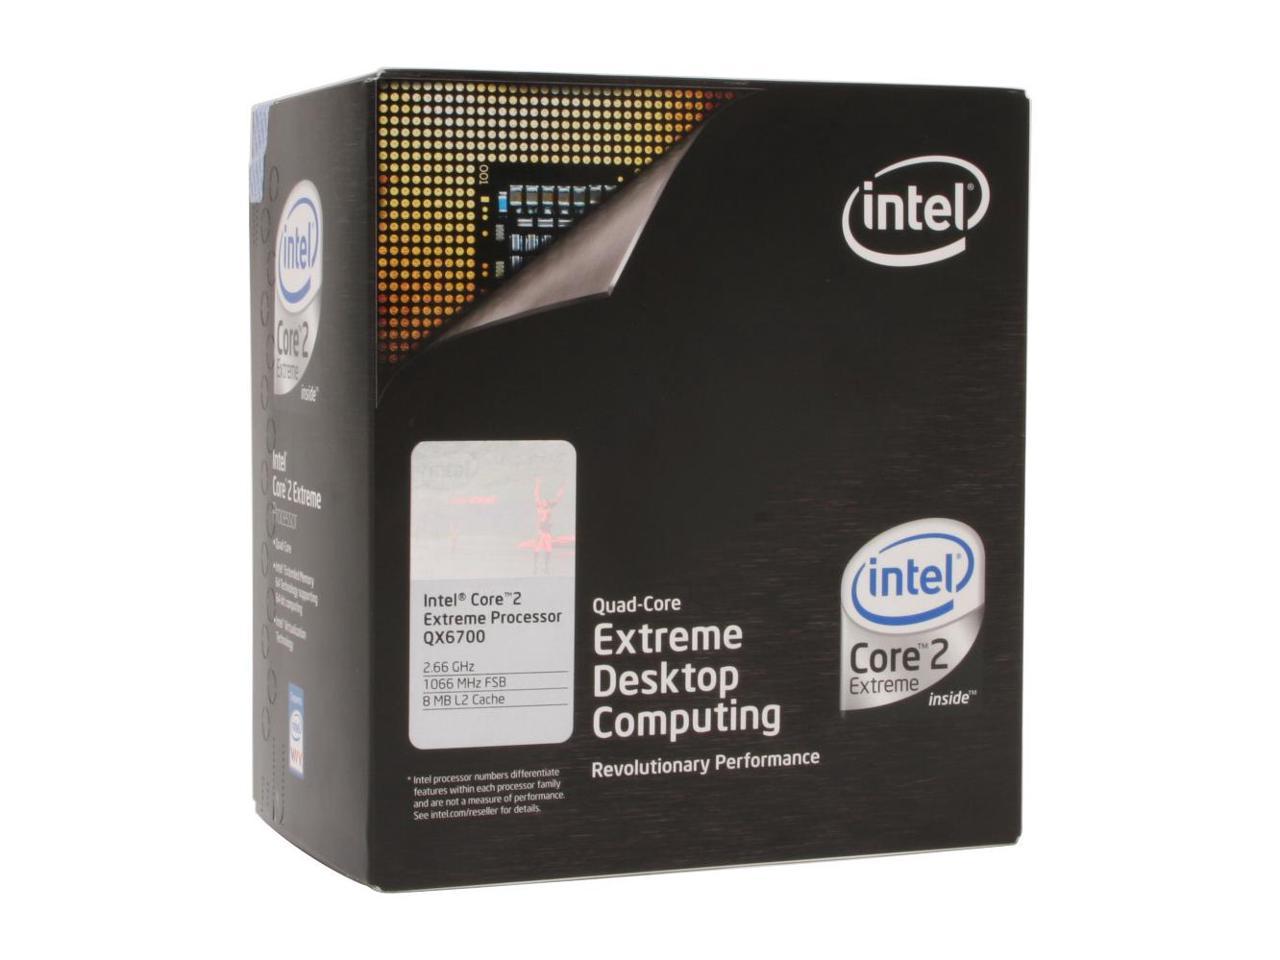 Intel Core 2 Extreme QX6700 LGA775 2.66GHz CPU Processor